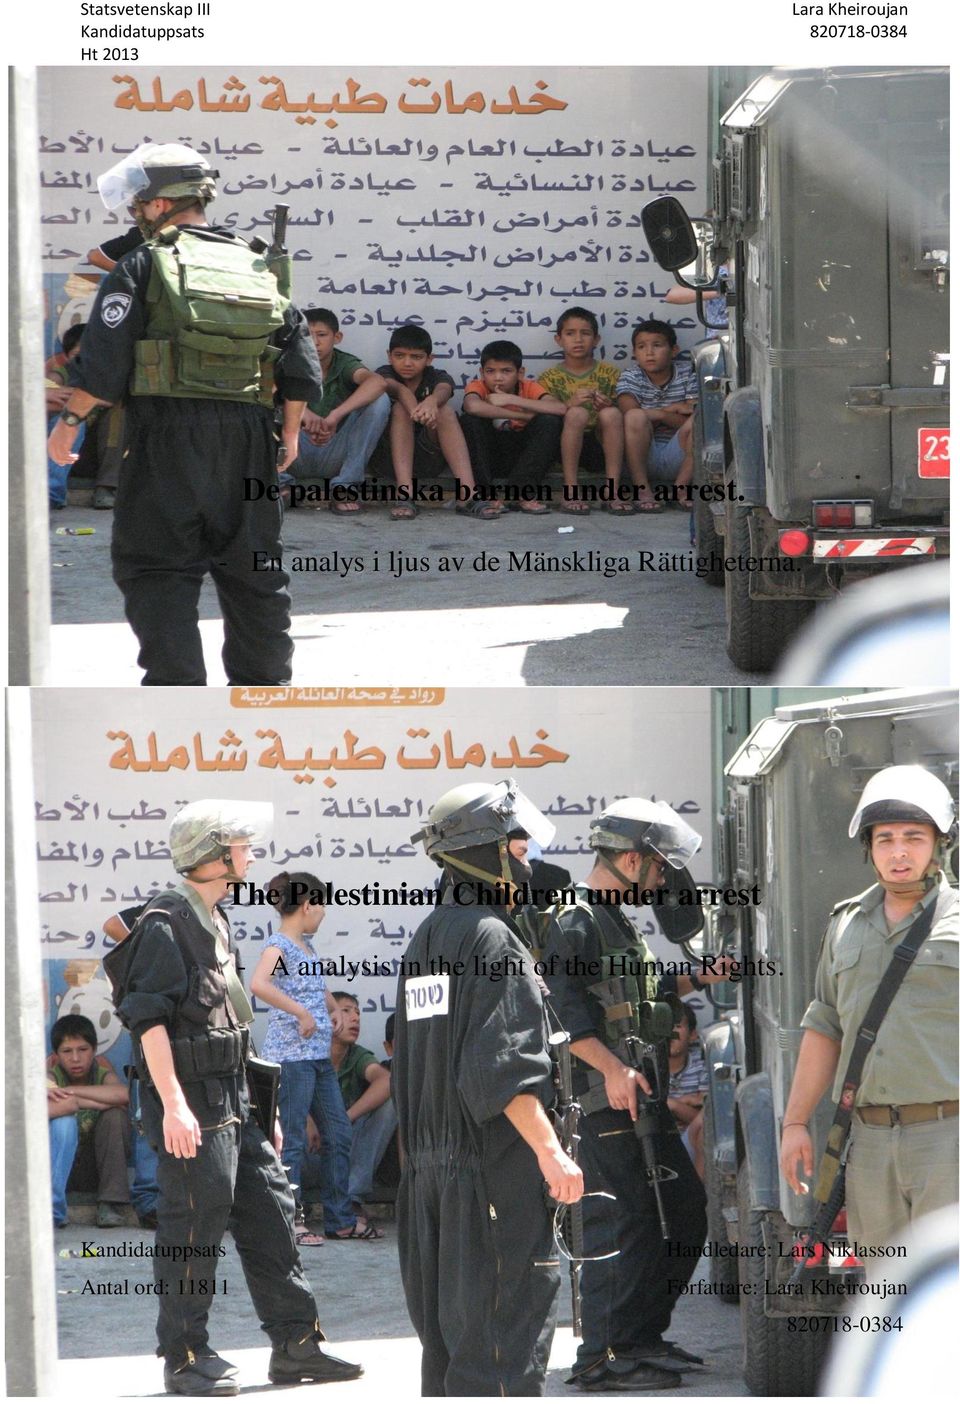 The Palestinian Children under arrest - A analysis in the light